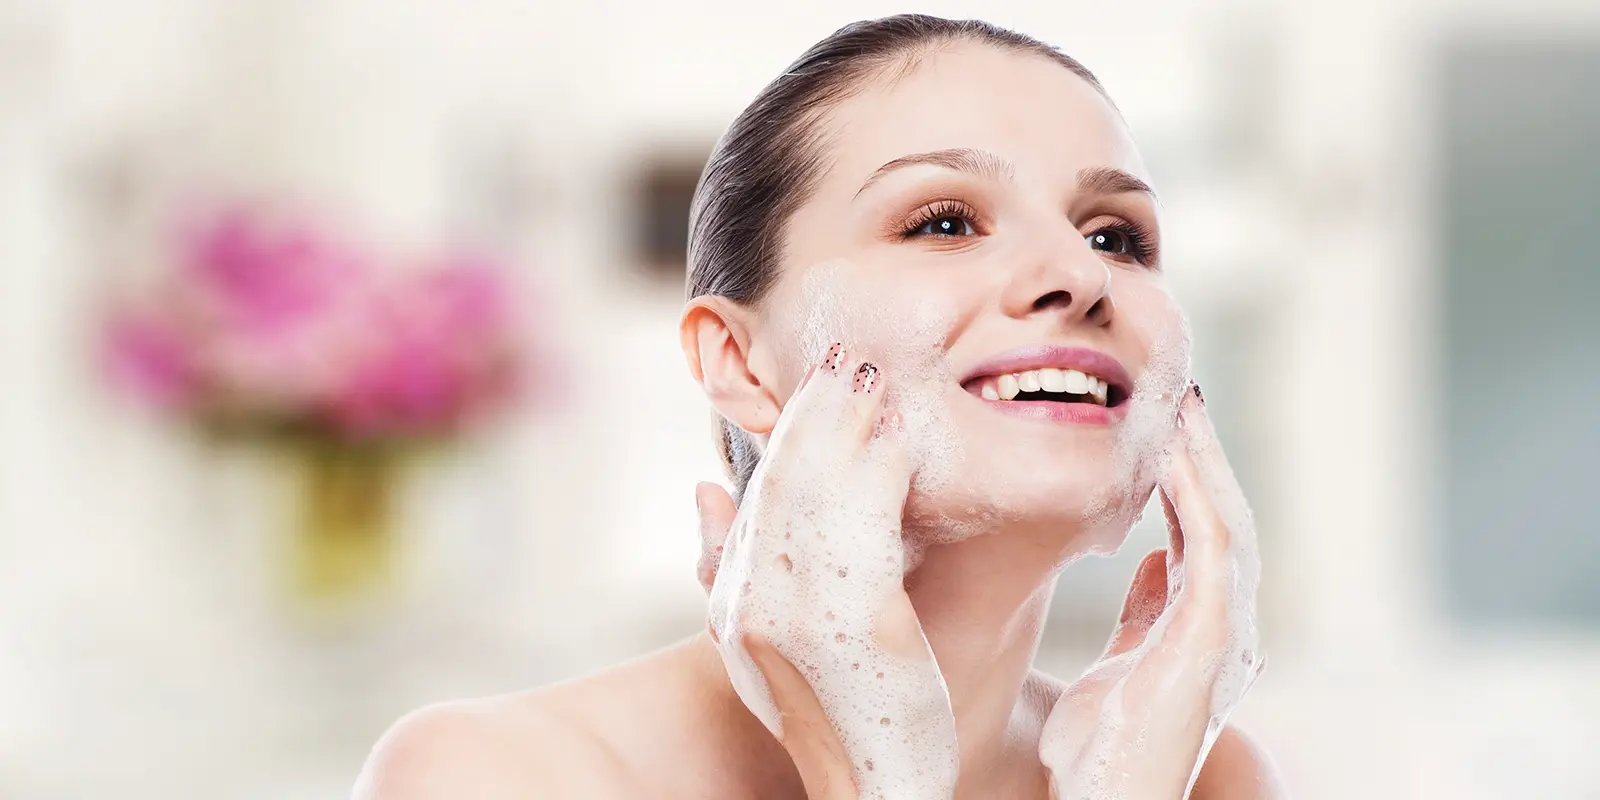 Salicylic Acid Face Wash for Clear, Healthy Skin